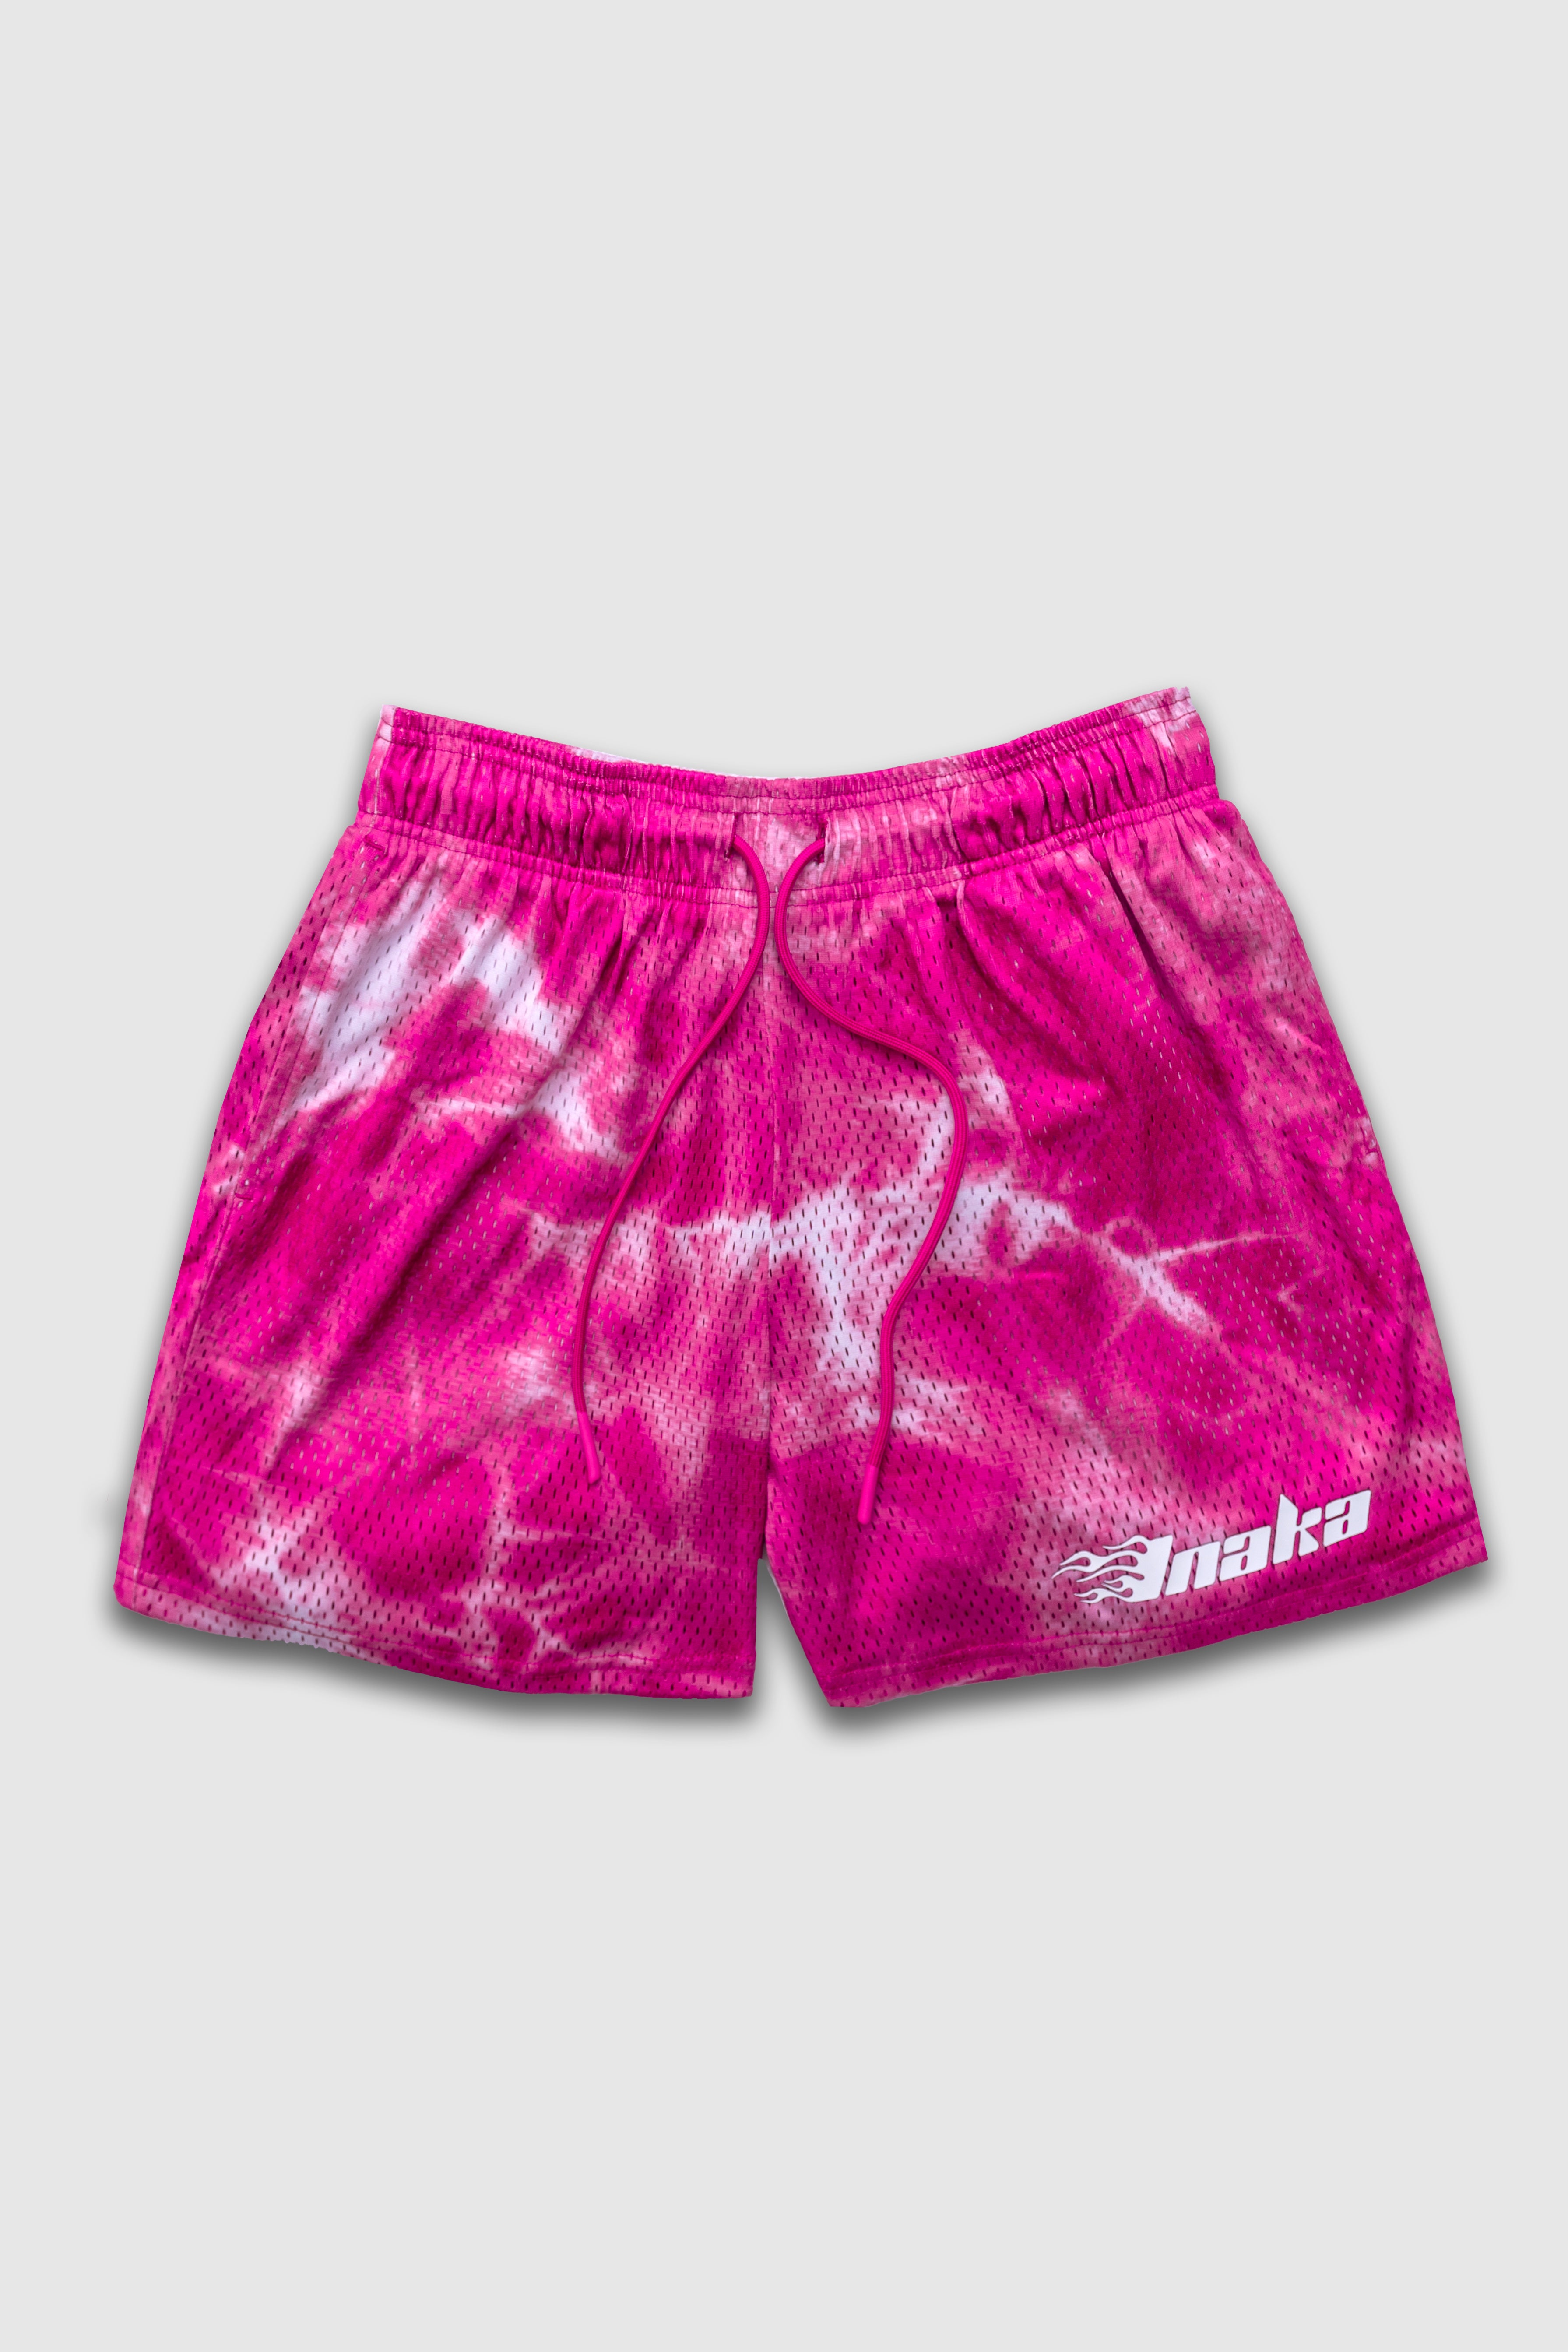 Women’s Smoke Shorts - Pink